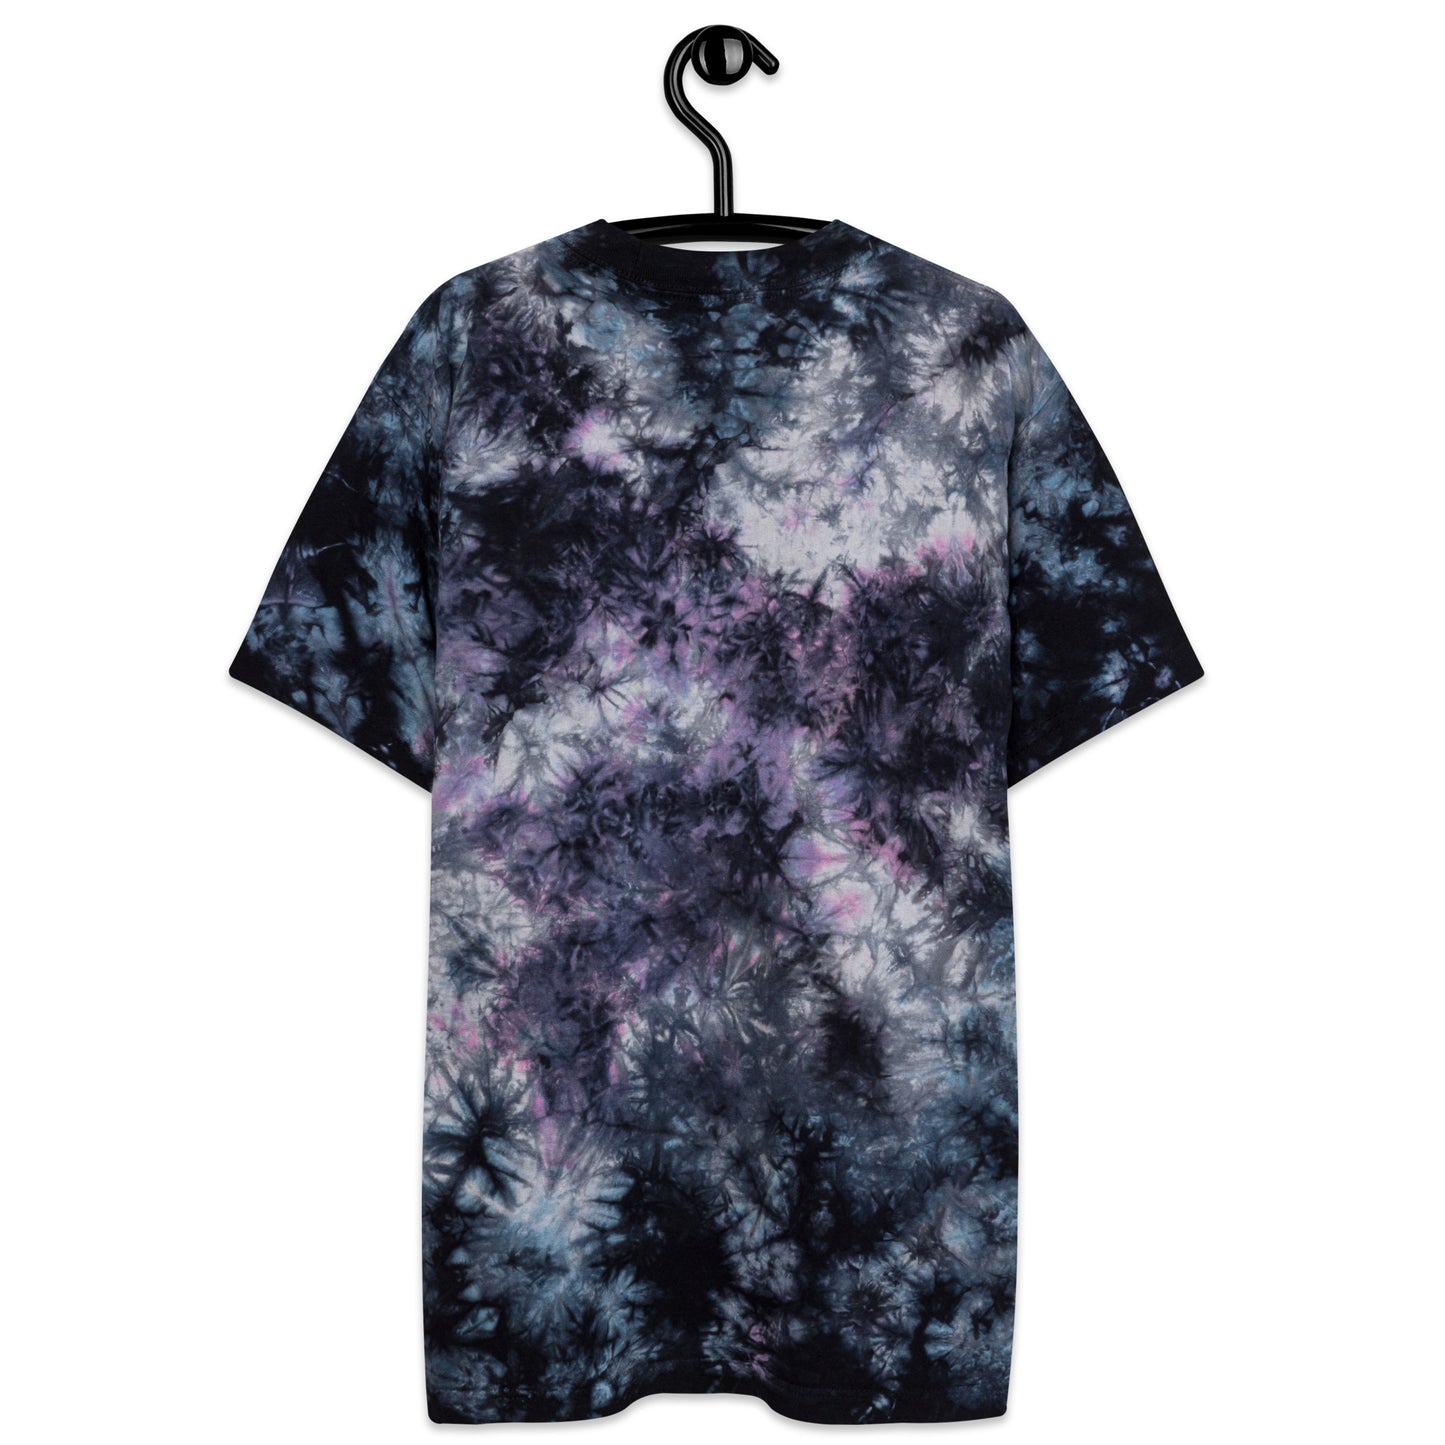 StoneyBois™ Oversized tie-dye t-shirt